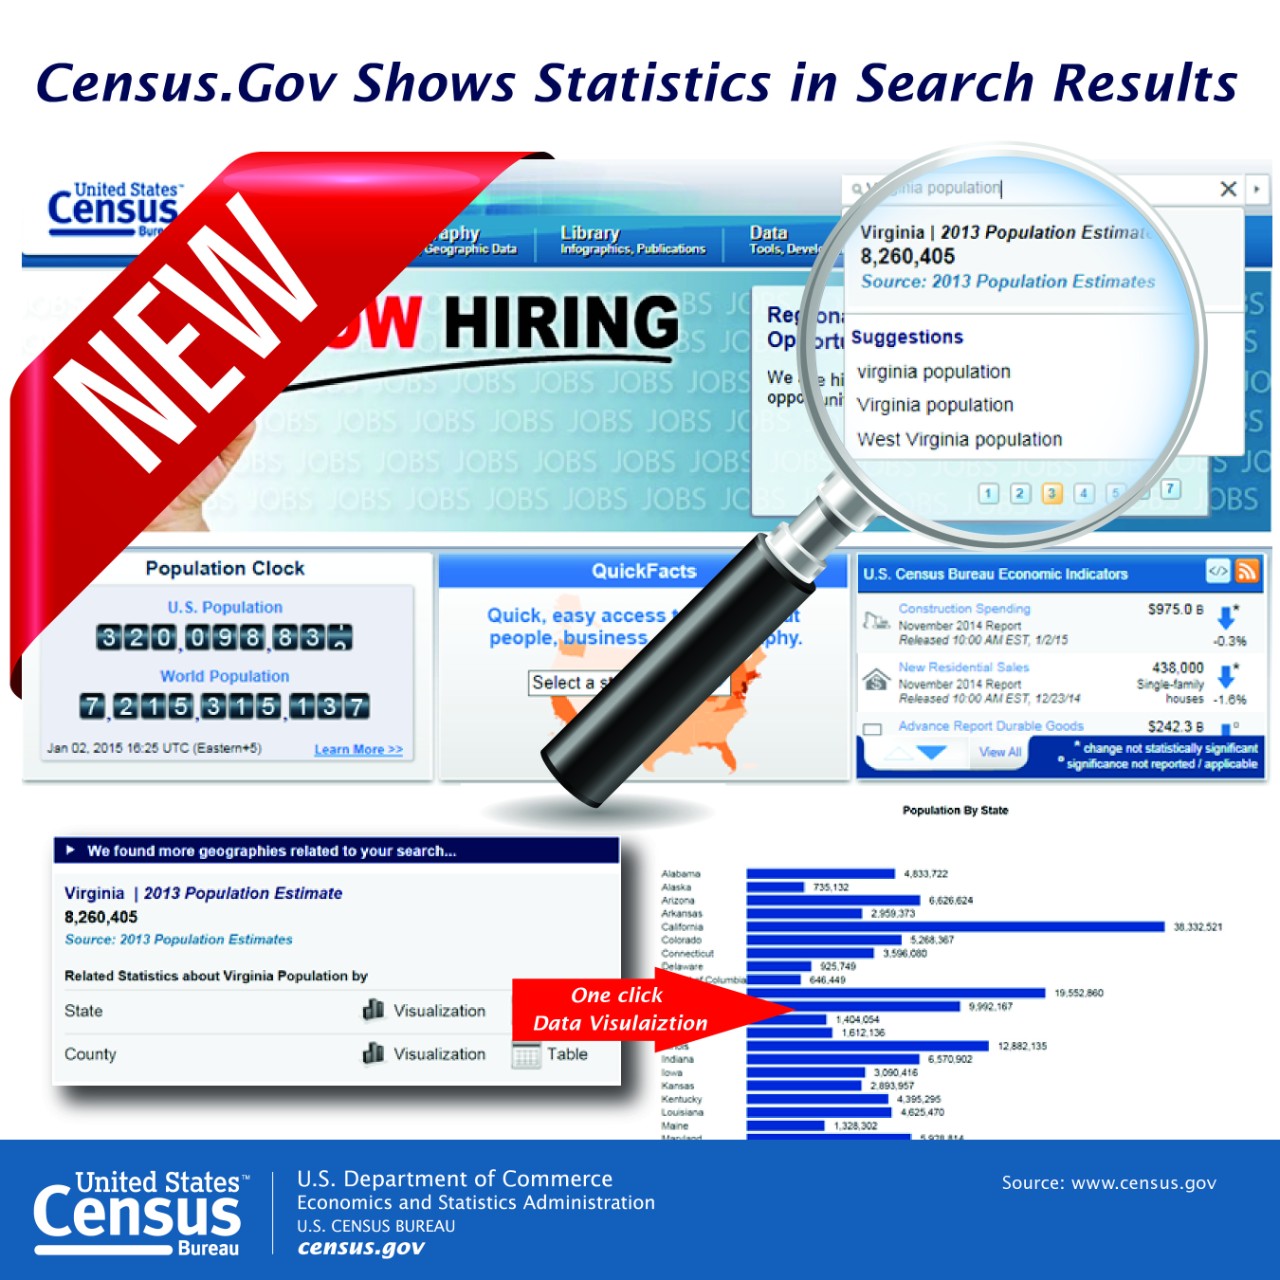 Census.gov Shows Statistics in Search Results